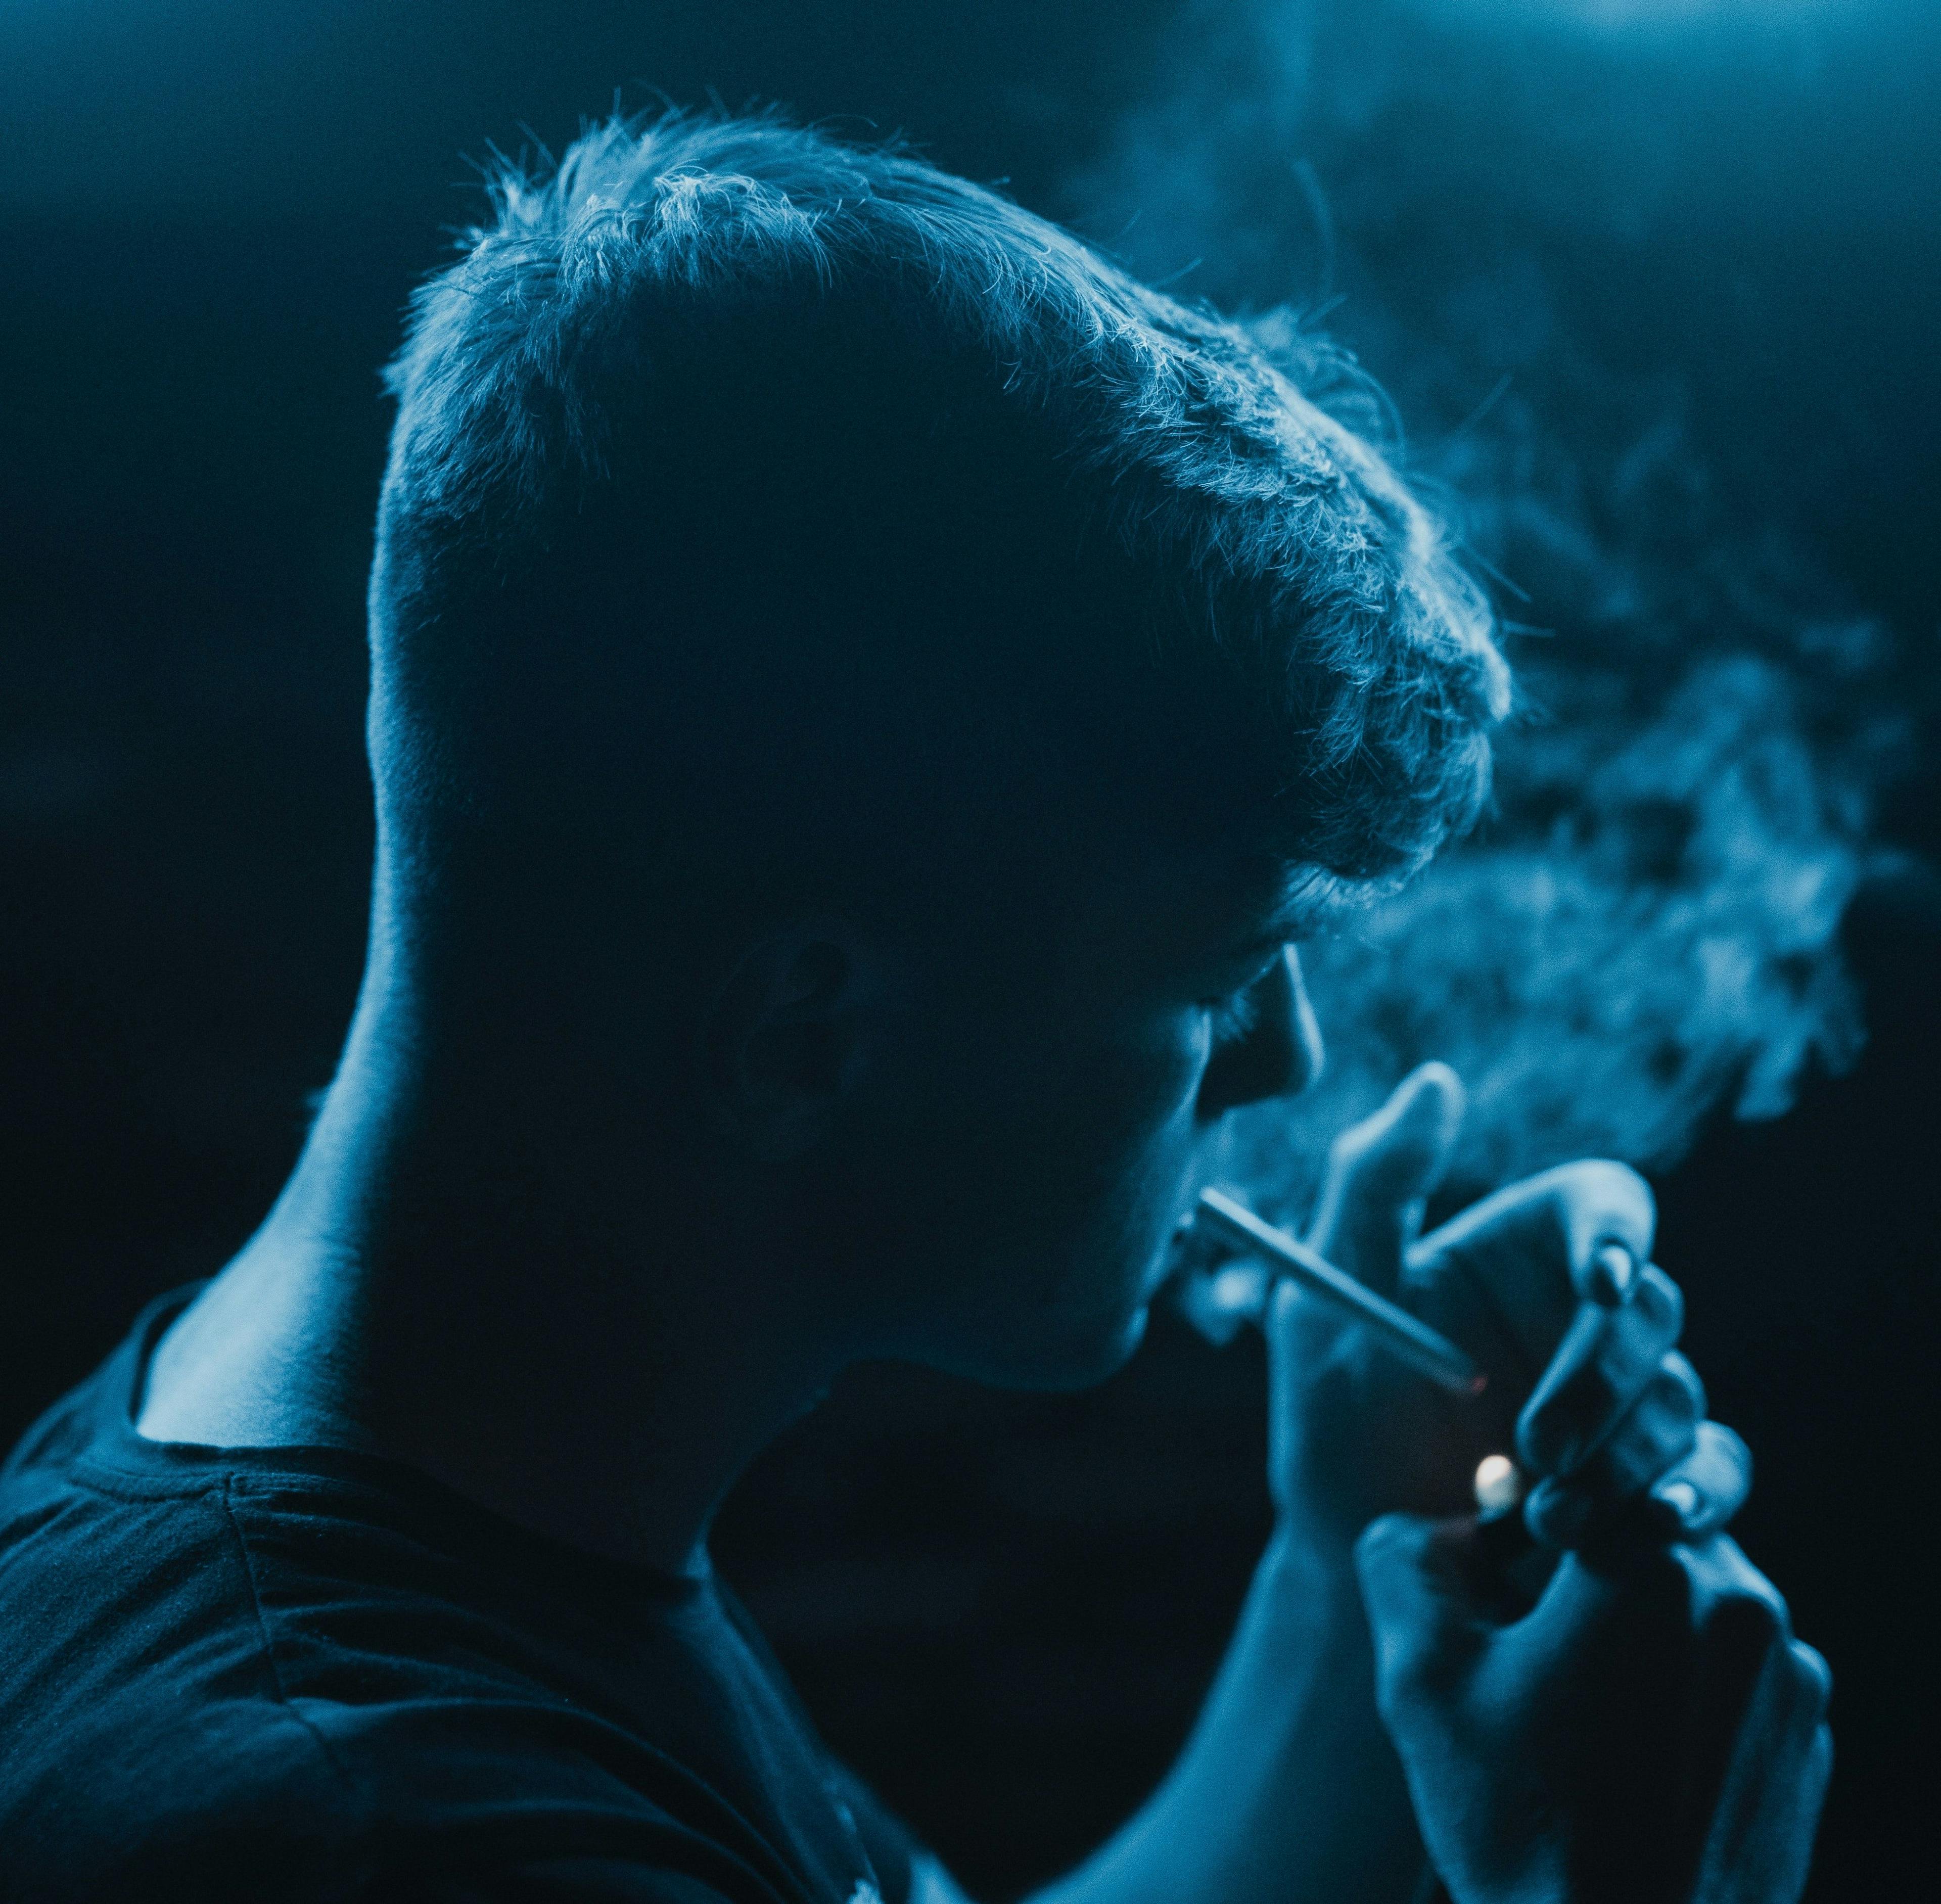 Smoking Linked to Teenage ADHD Impulsivity, Inattention